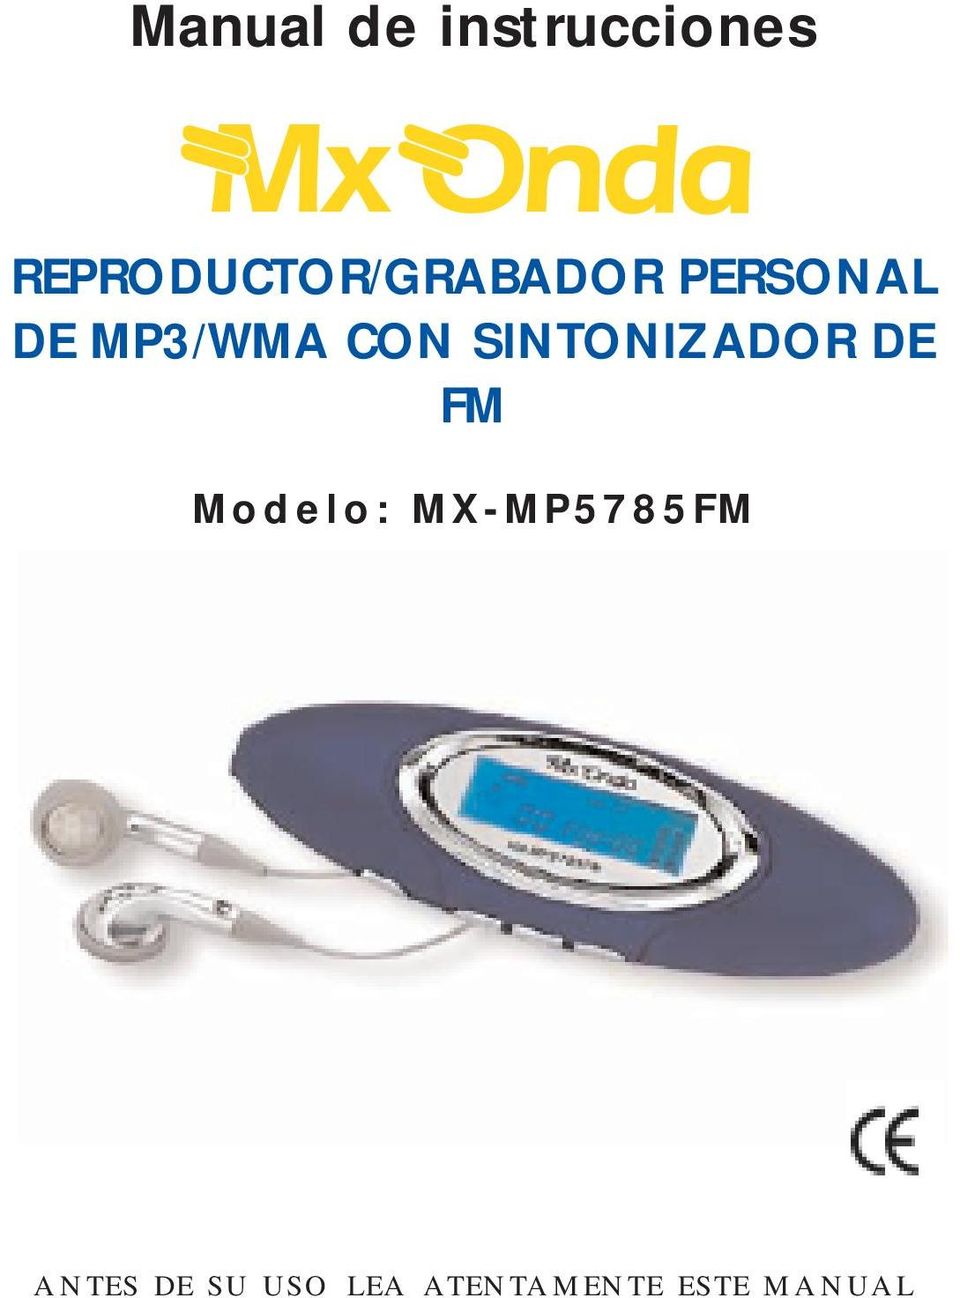 MP3/WMA CON SINTONIZADOR DE FM